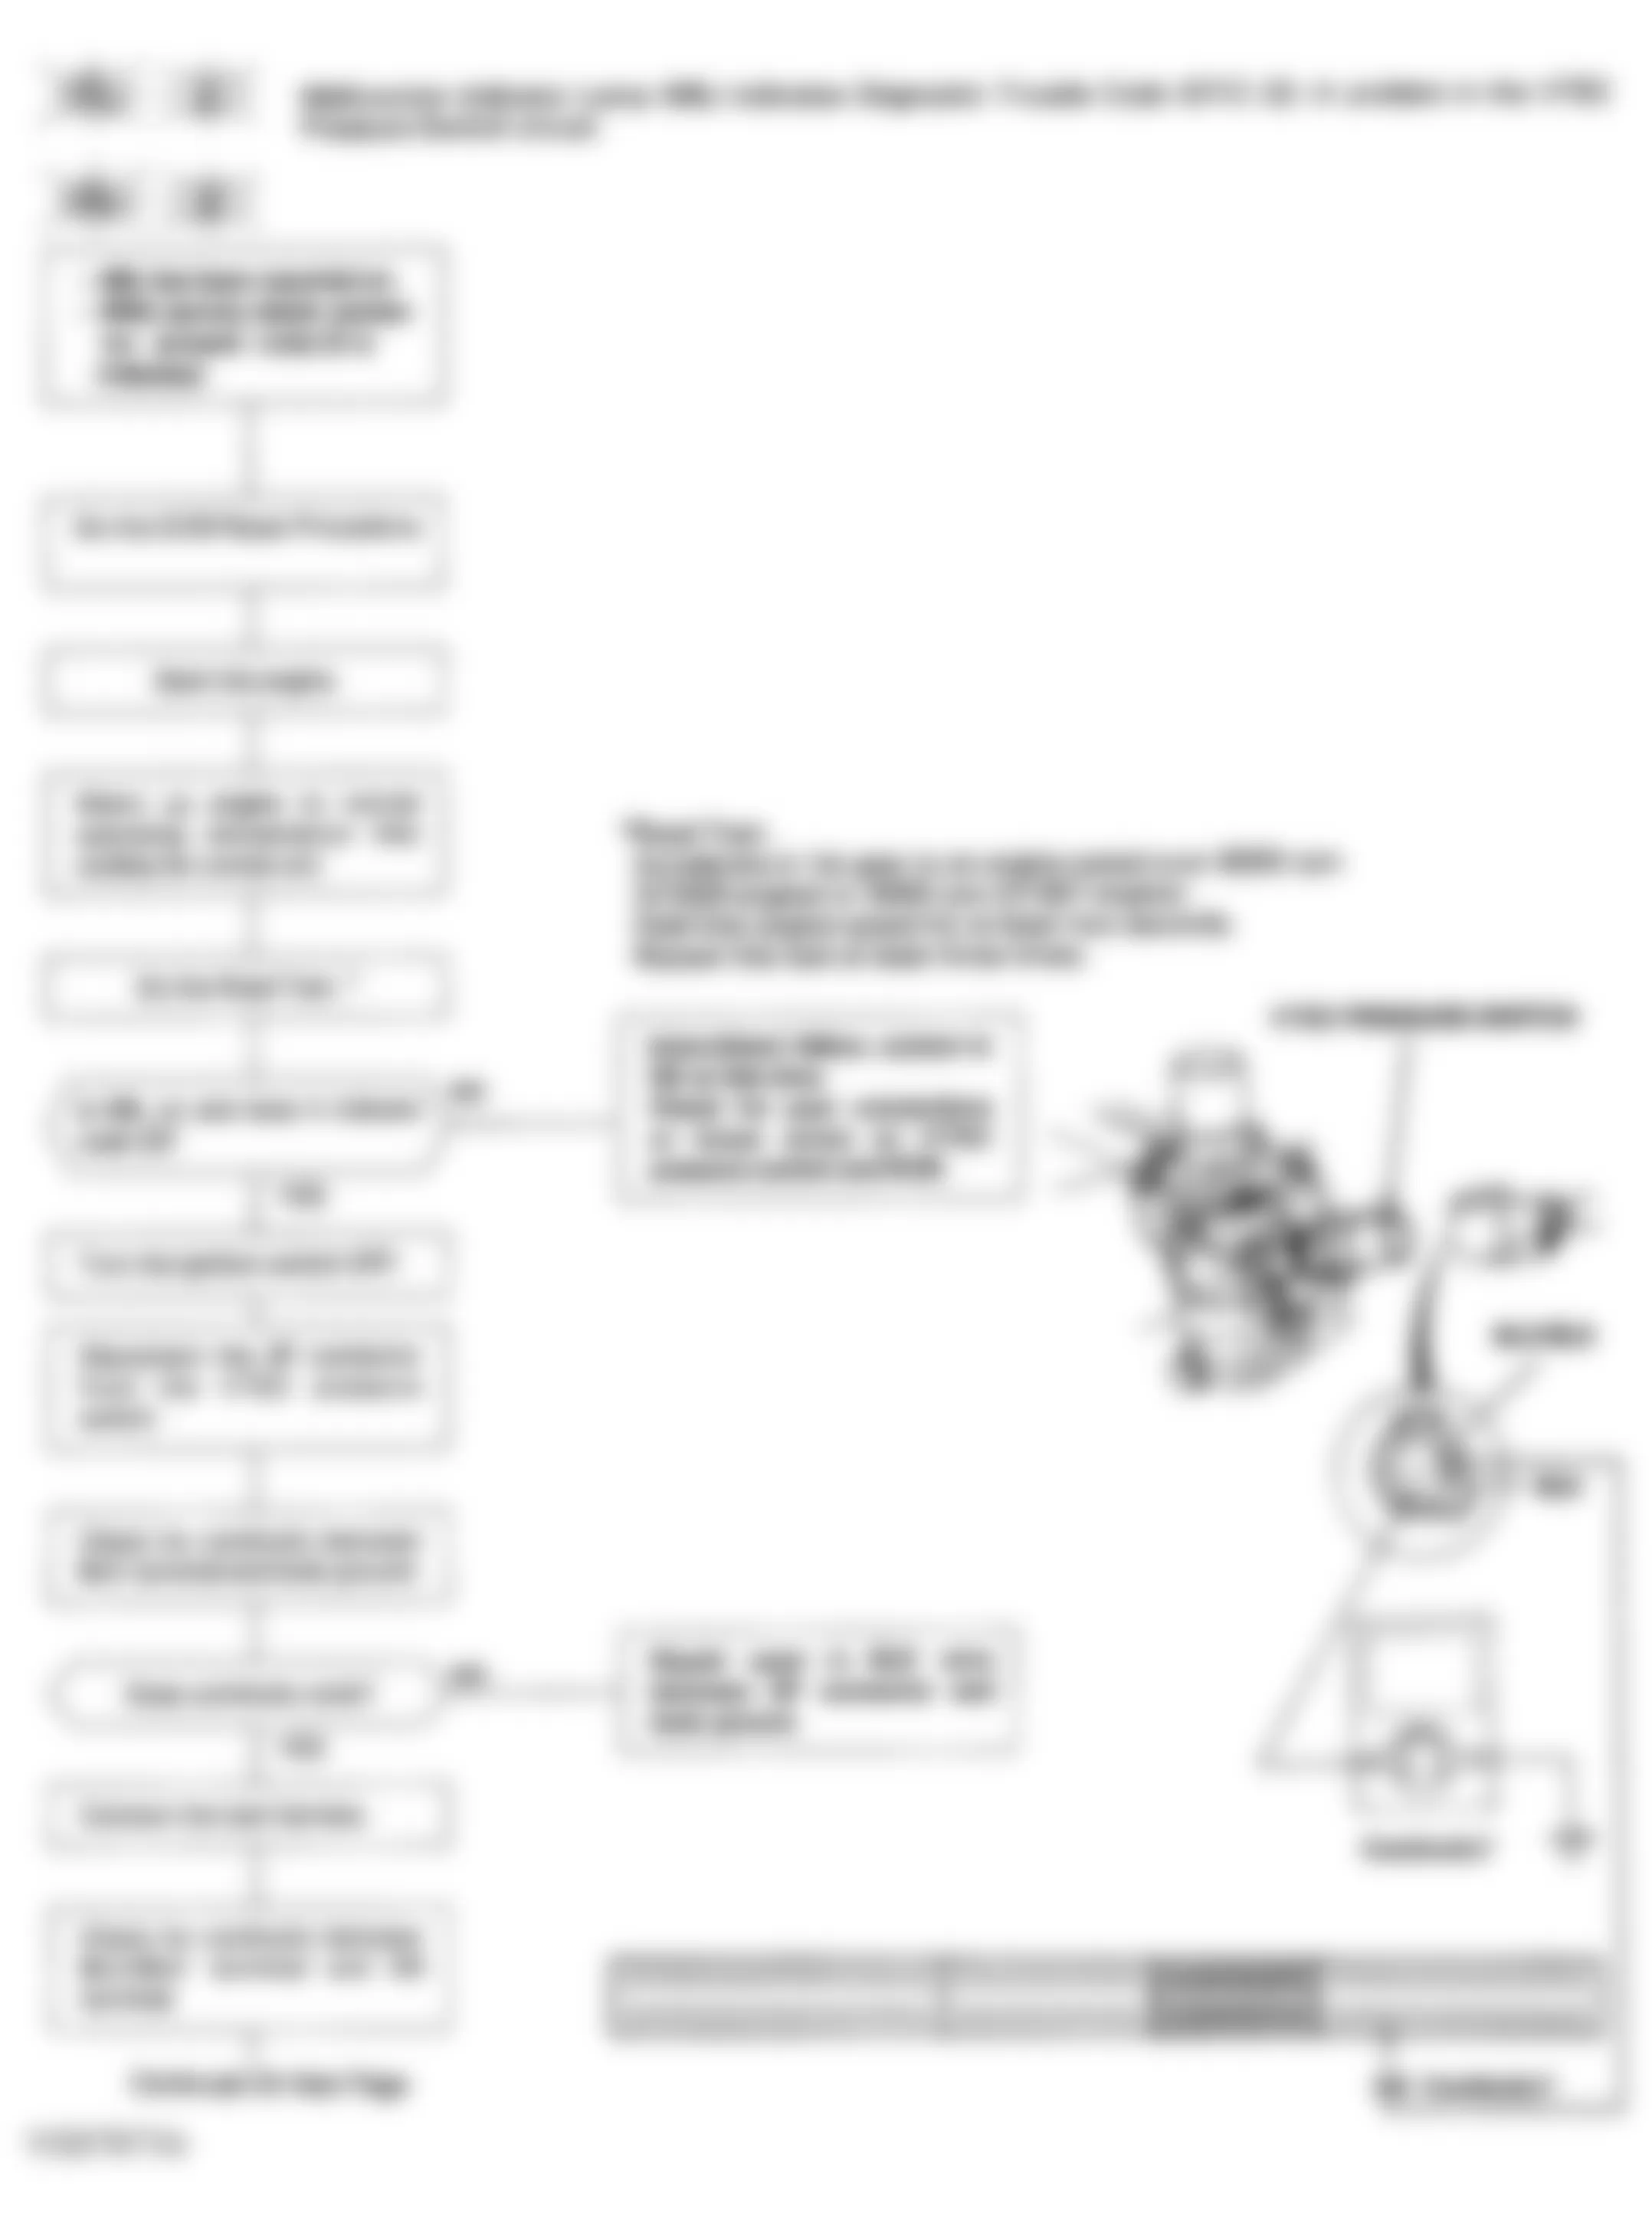 Honda Civic Si 1993 - Component Locations -  Code 22 Flowchart, VTEC Pressure Switch (1 of 3)